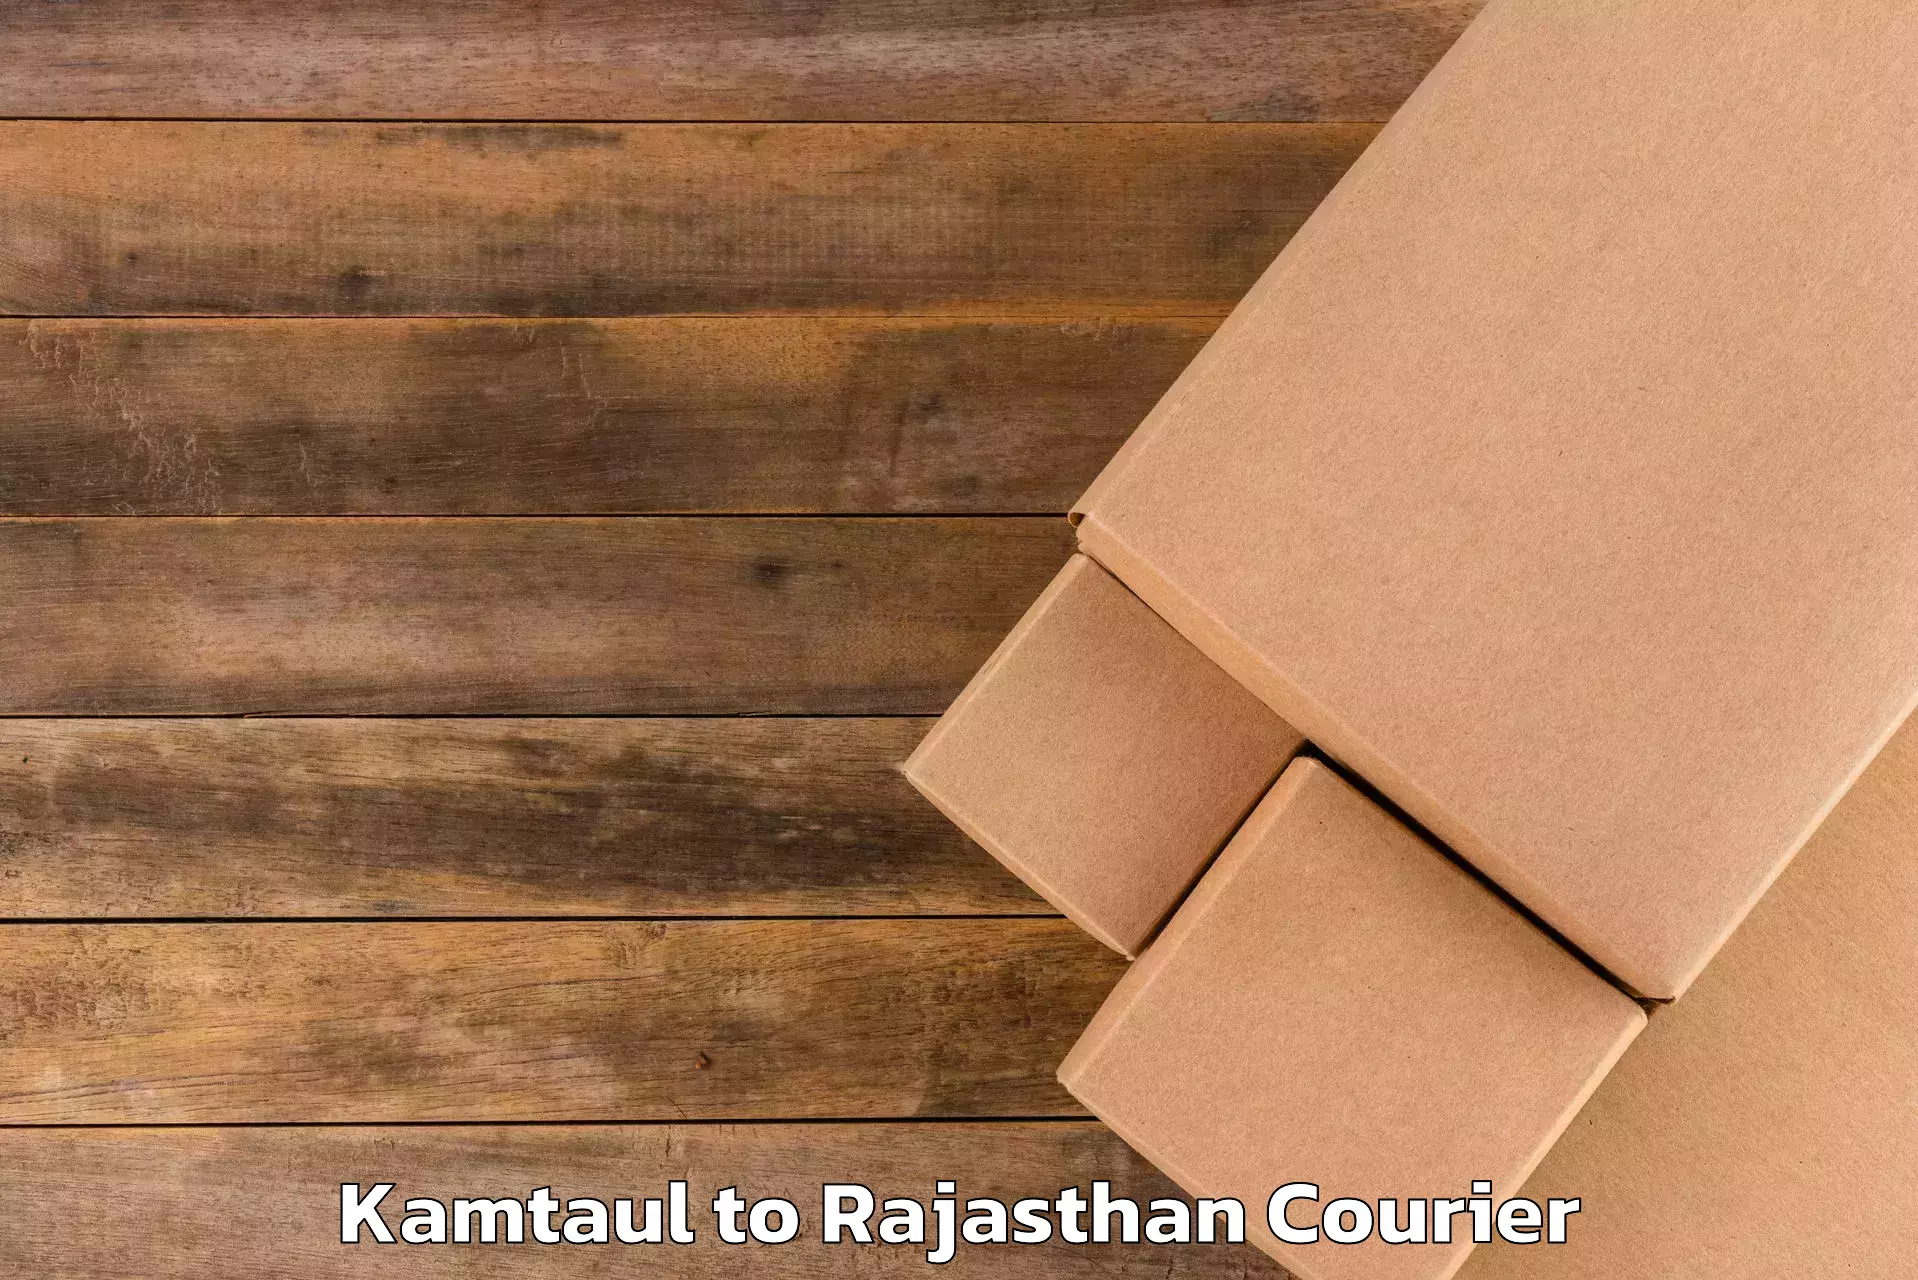 Emergency baggage service Kamtaul to Rajasthan